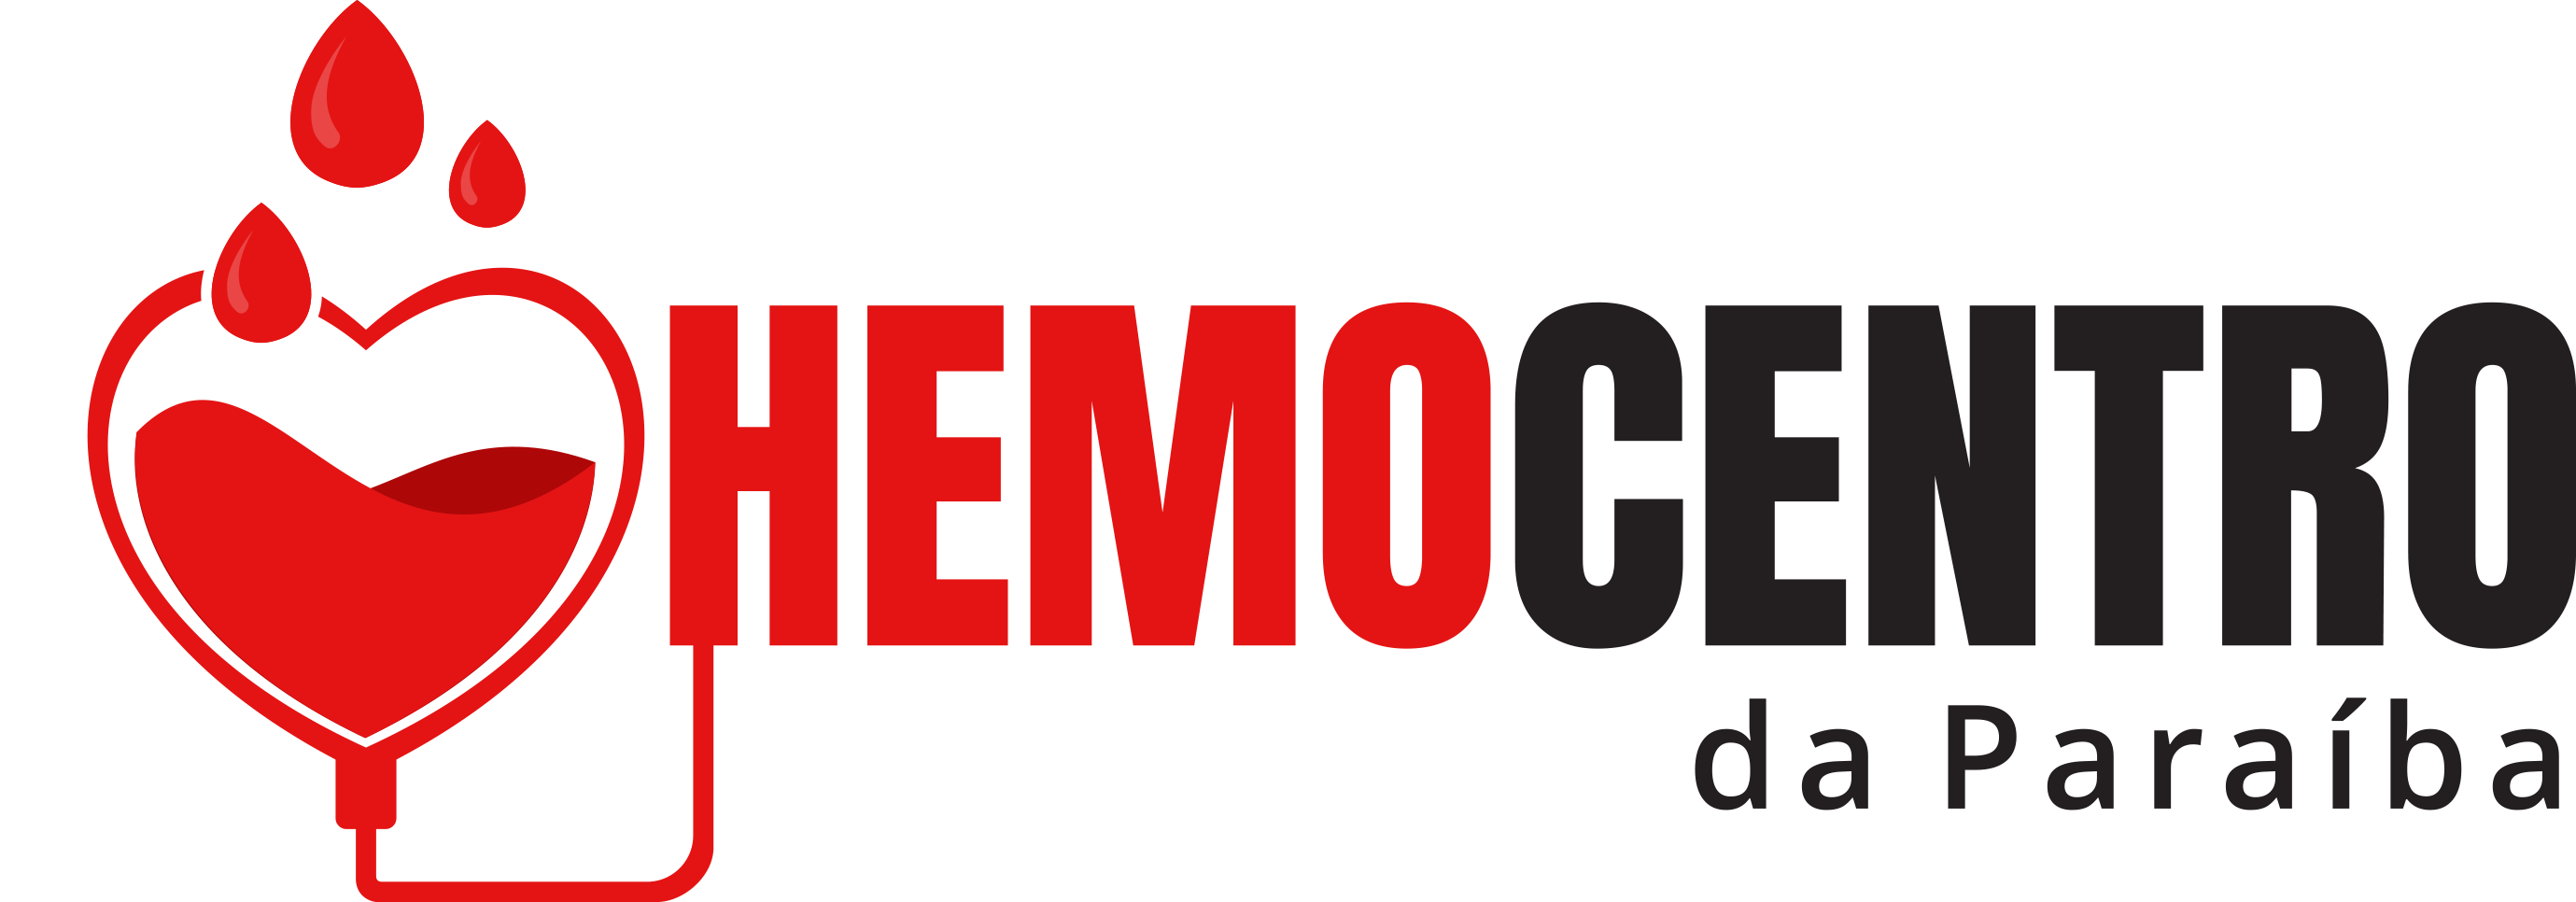 Logo Hemocentro Nova